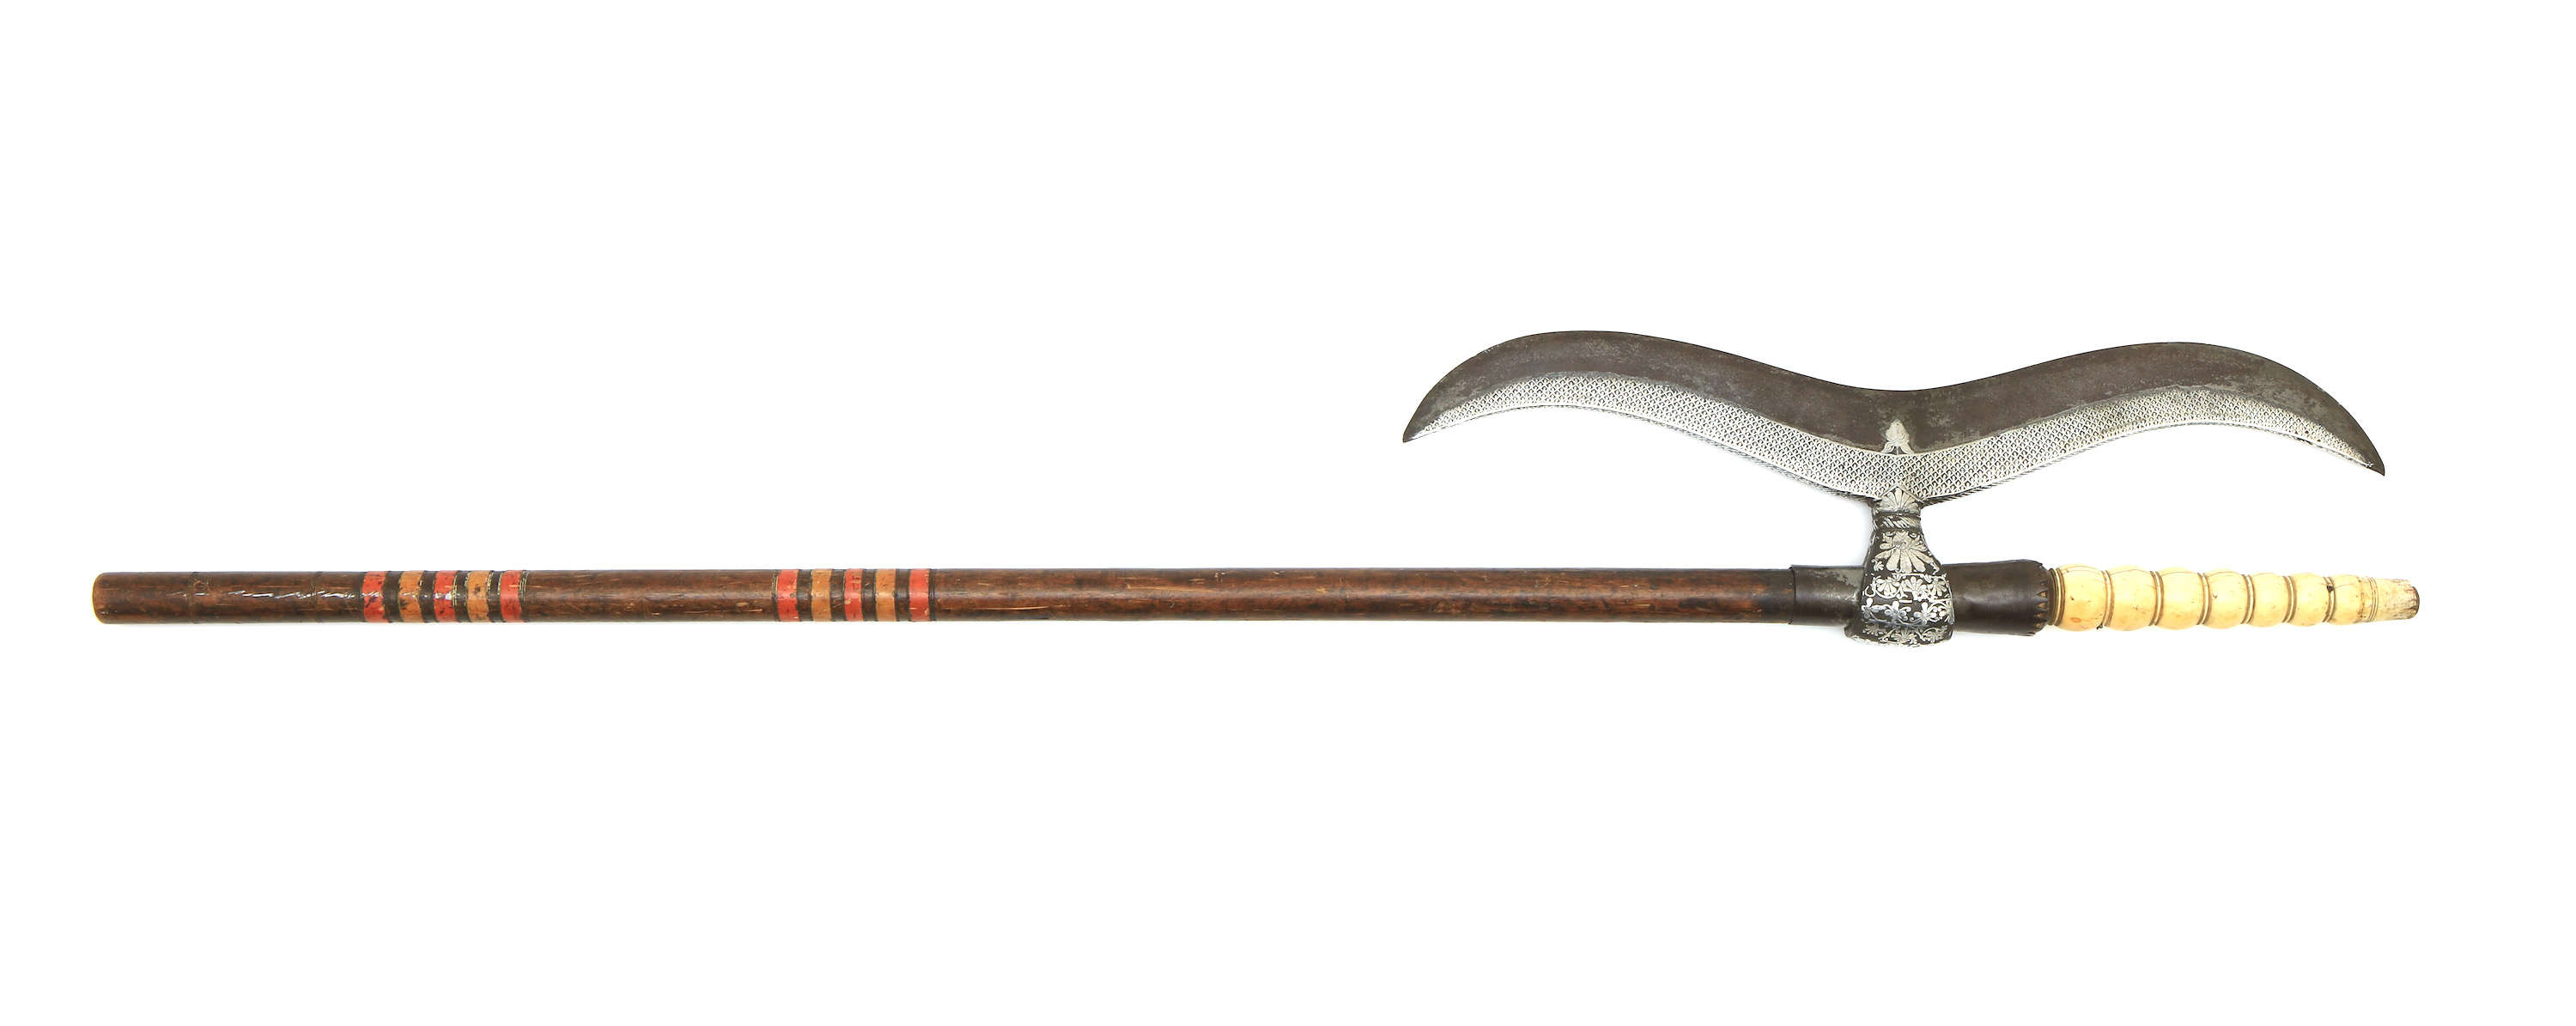 Bullova battle axe of the Khond people of India